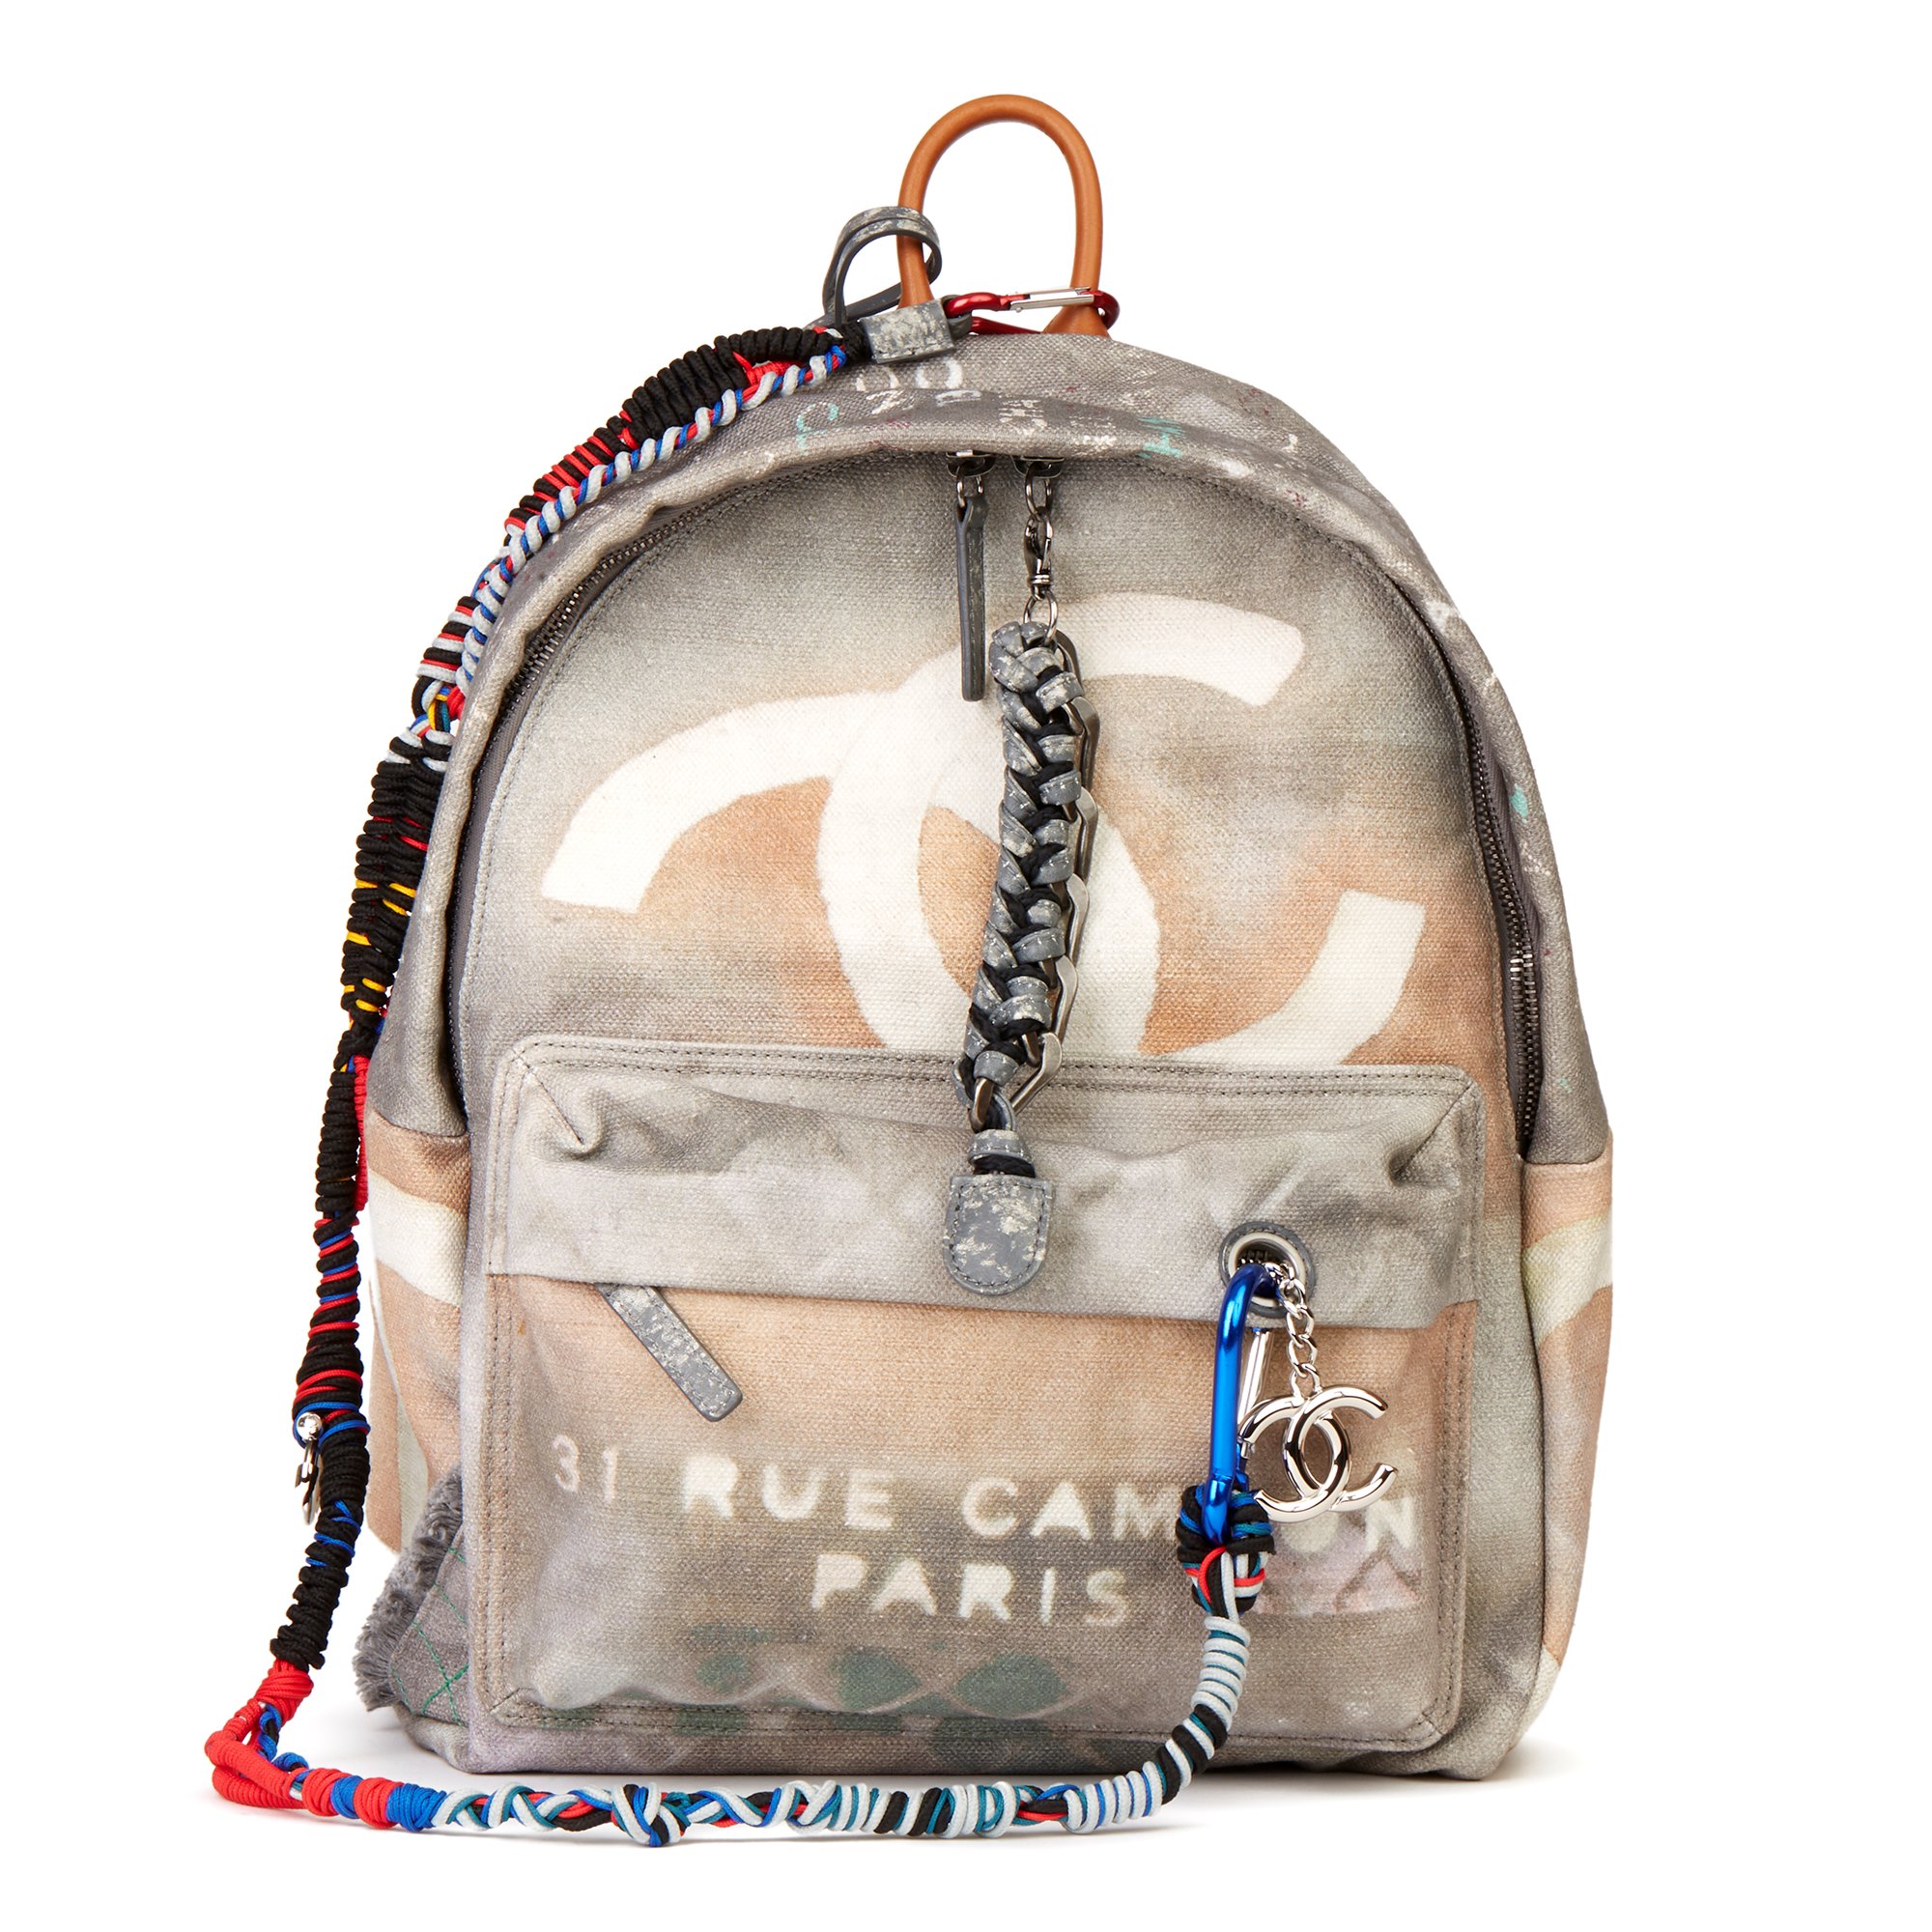 Chanel Backpack Purseforum Asian | Literacy Basics